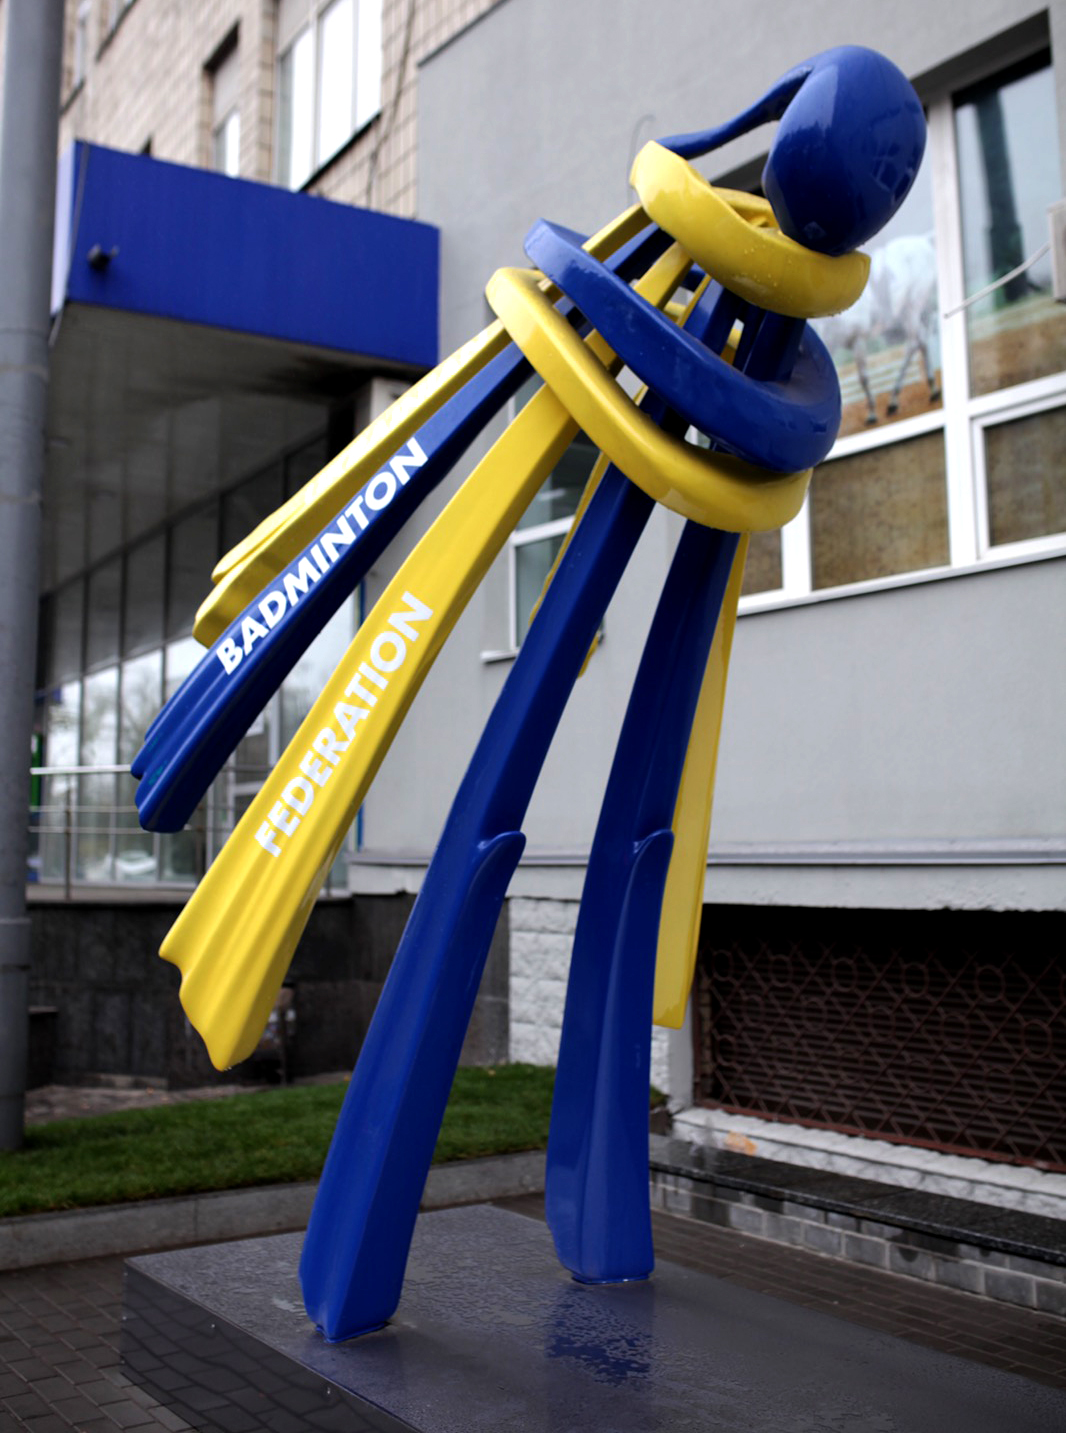  арт-объект, символ фaедерации бадминтона Украины